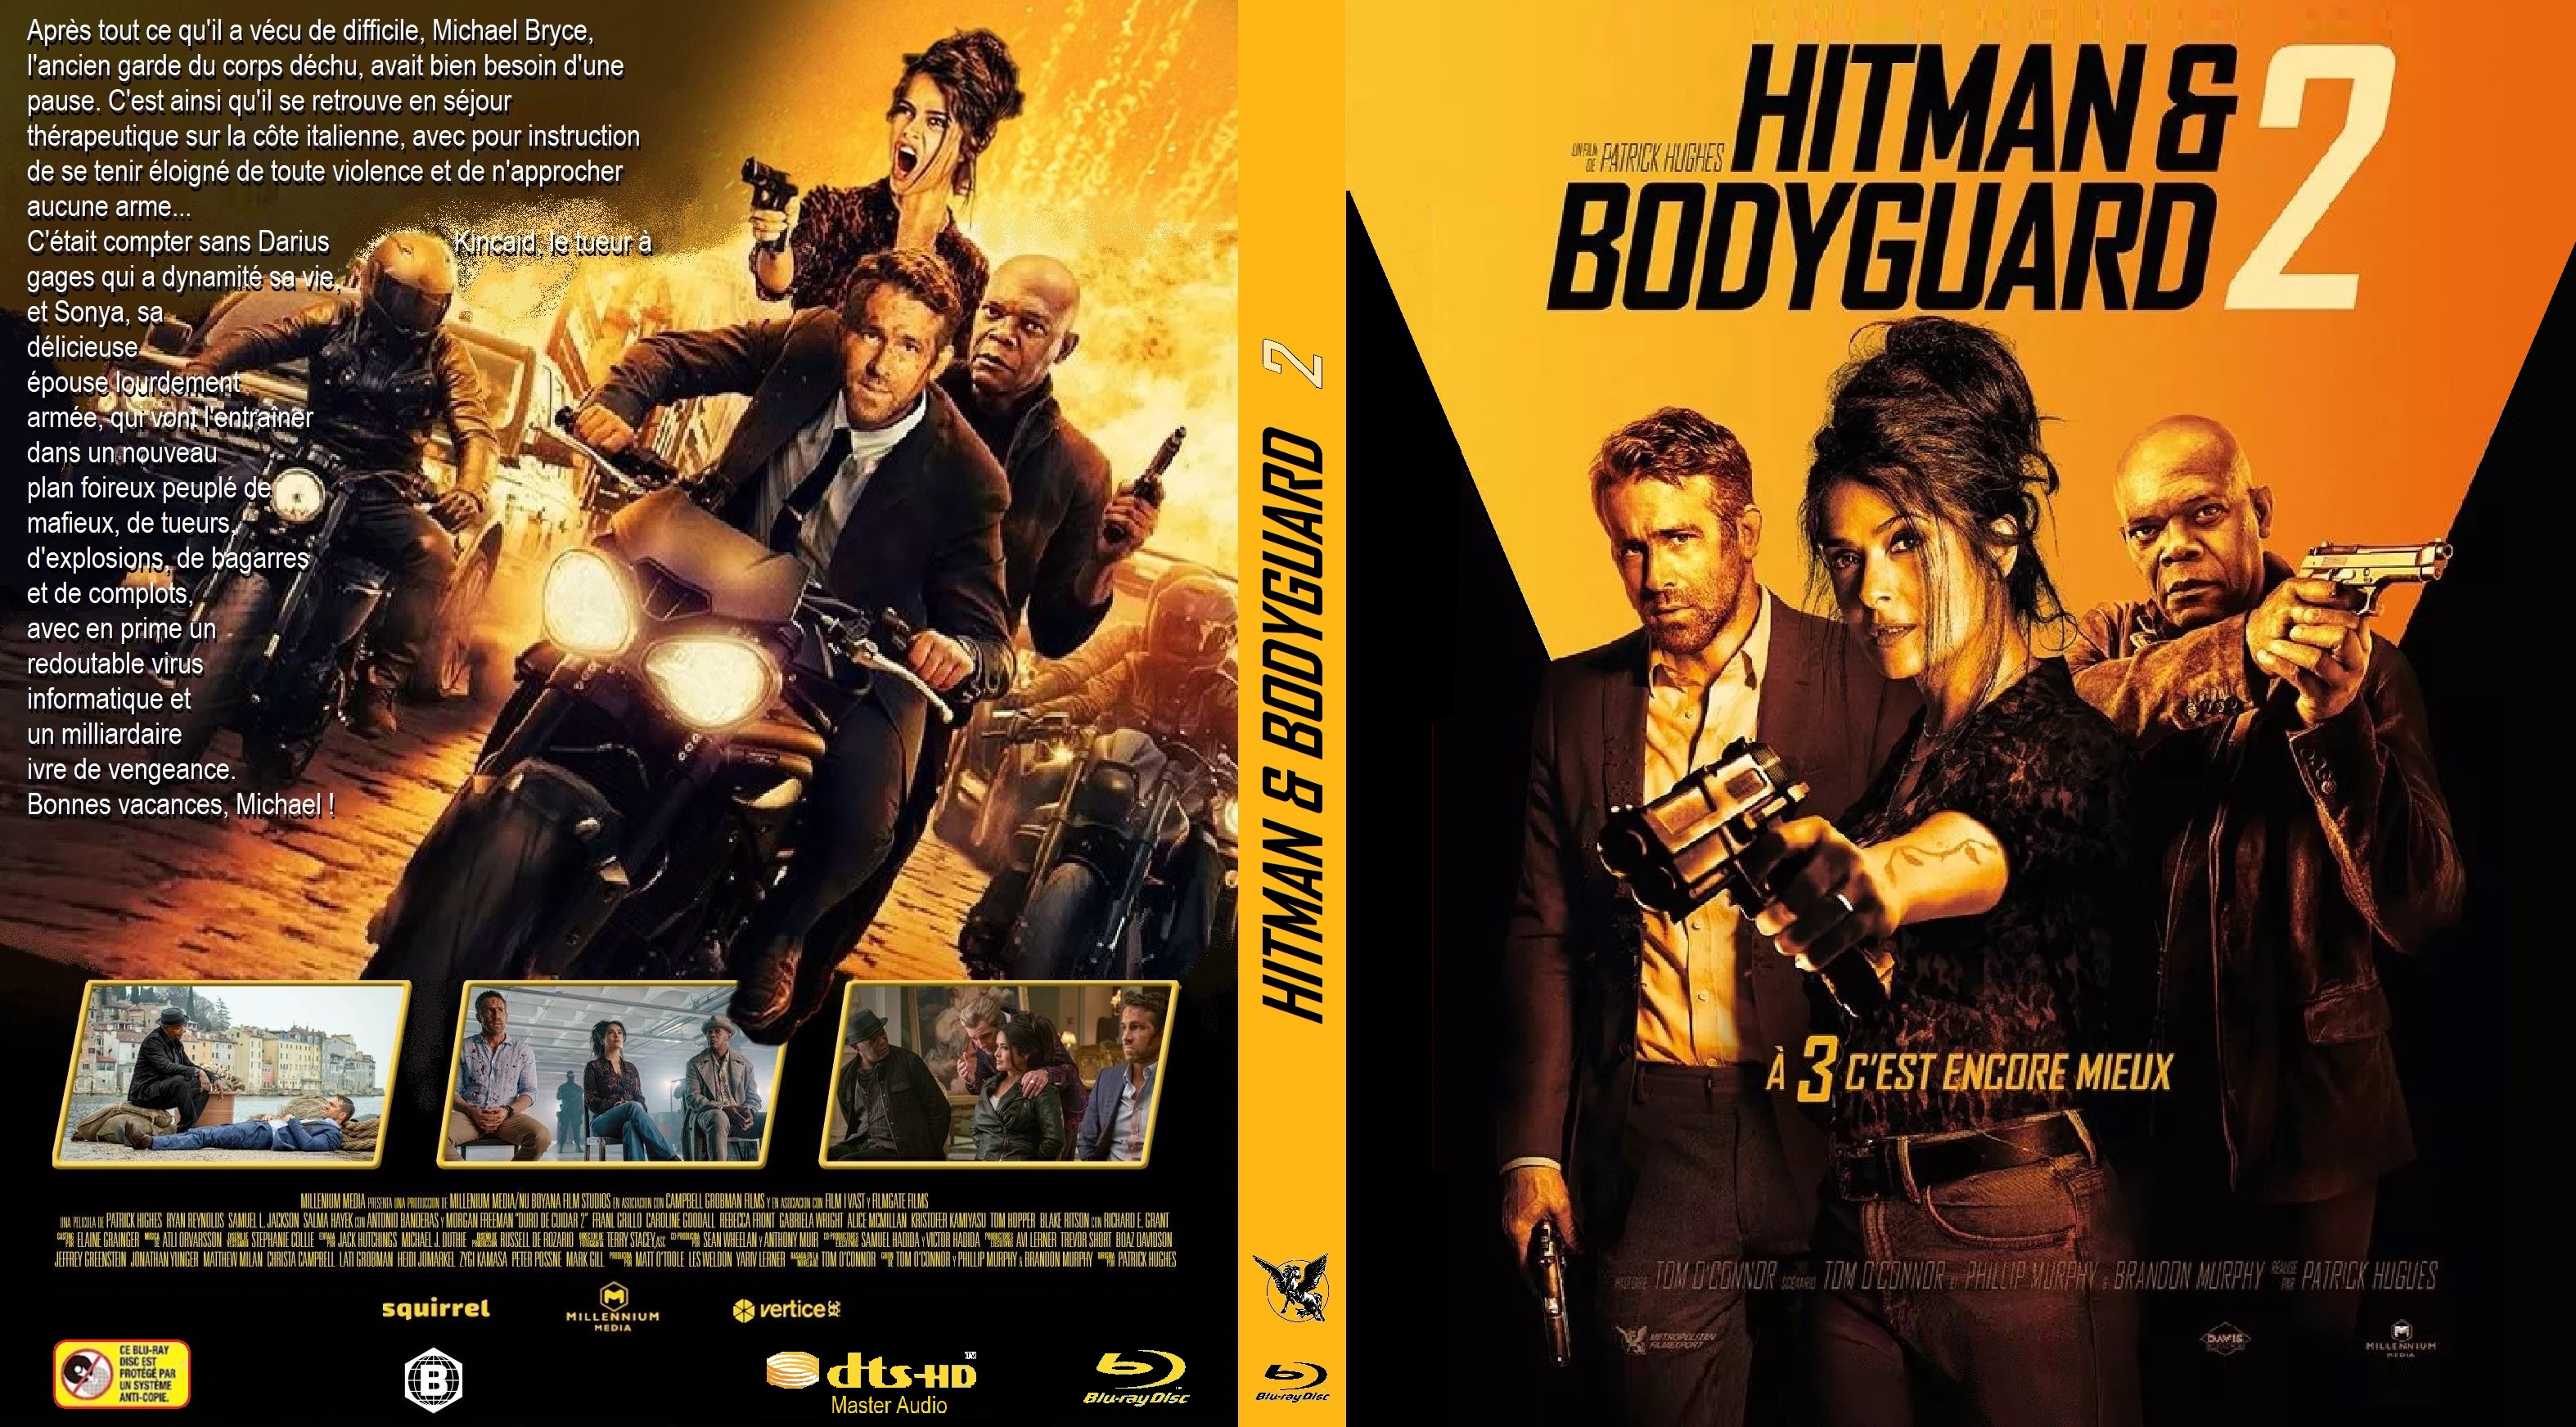 Jaquette DVD Hitman & Bodyguard 2 custom (BLU-RAY)